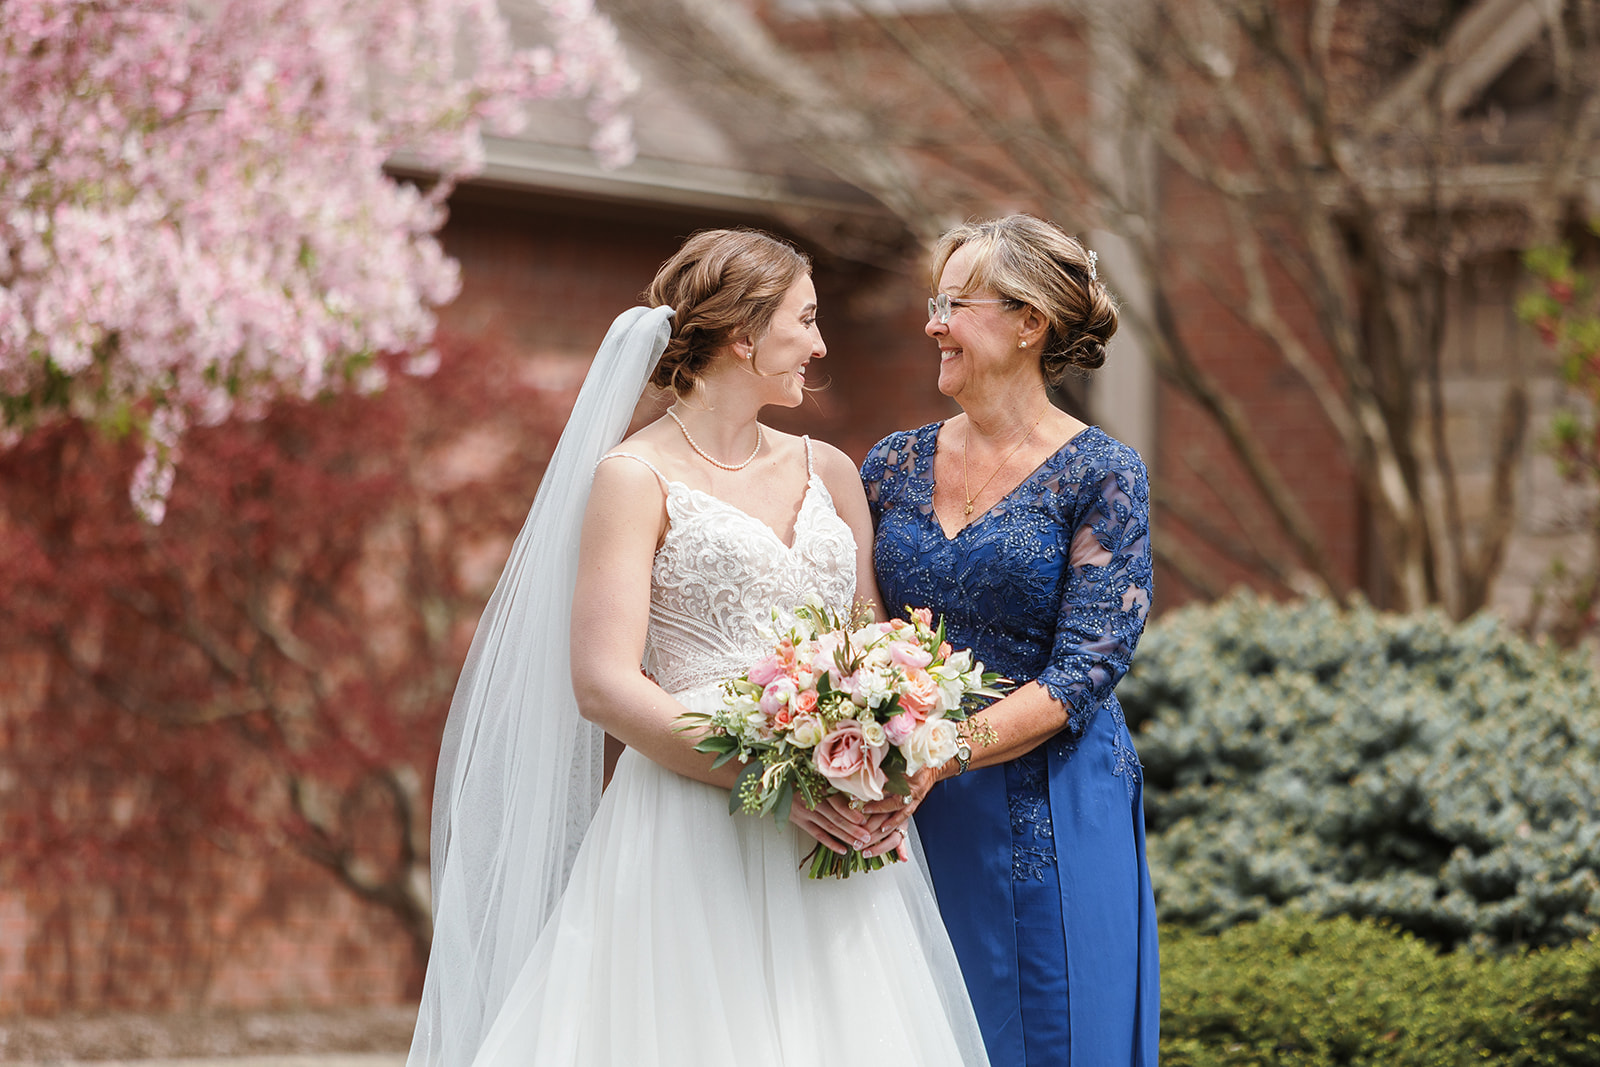 Kelly Reed and daughter bridget at wedding